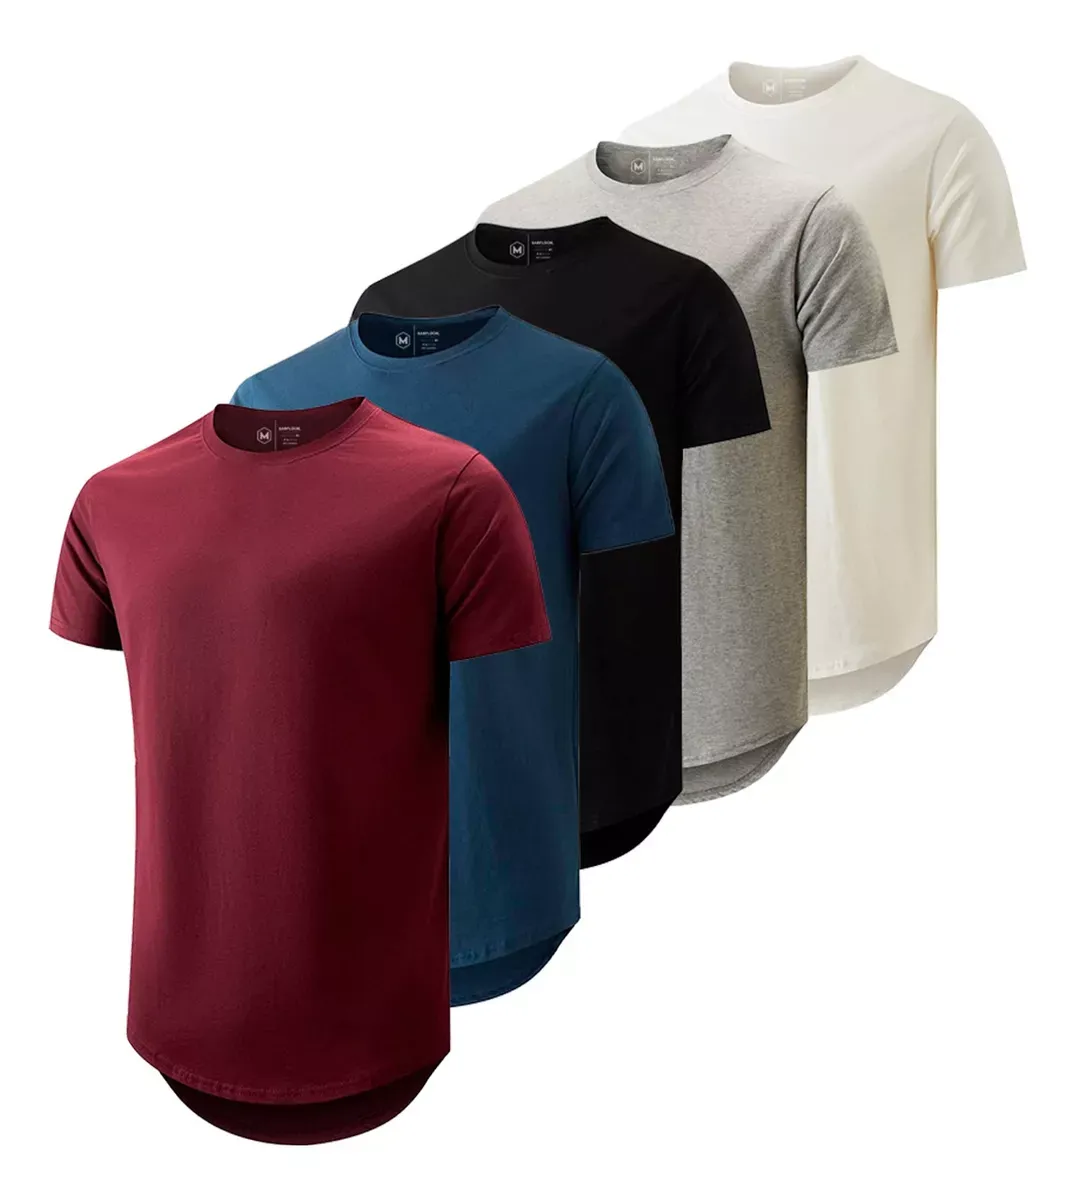 Kit 5 Camisetas Masculina Long Line Cotton Oversize By Zaroc (Tamanho P M Gg)